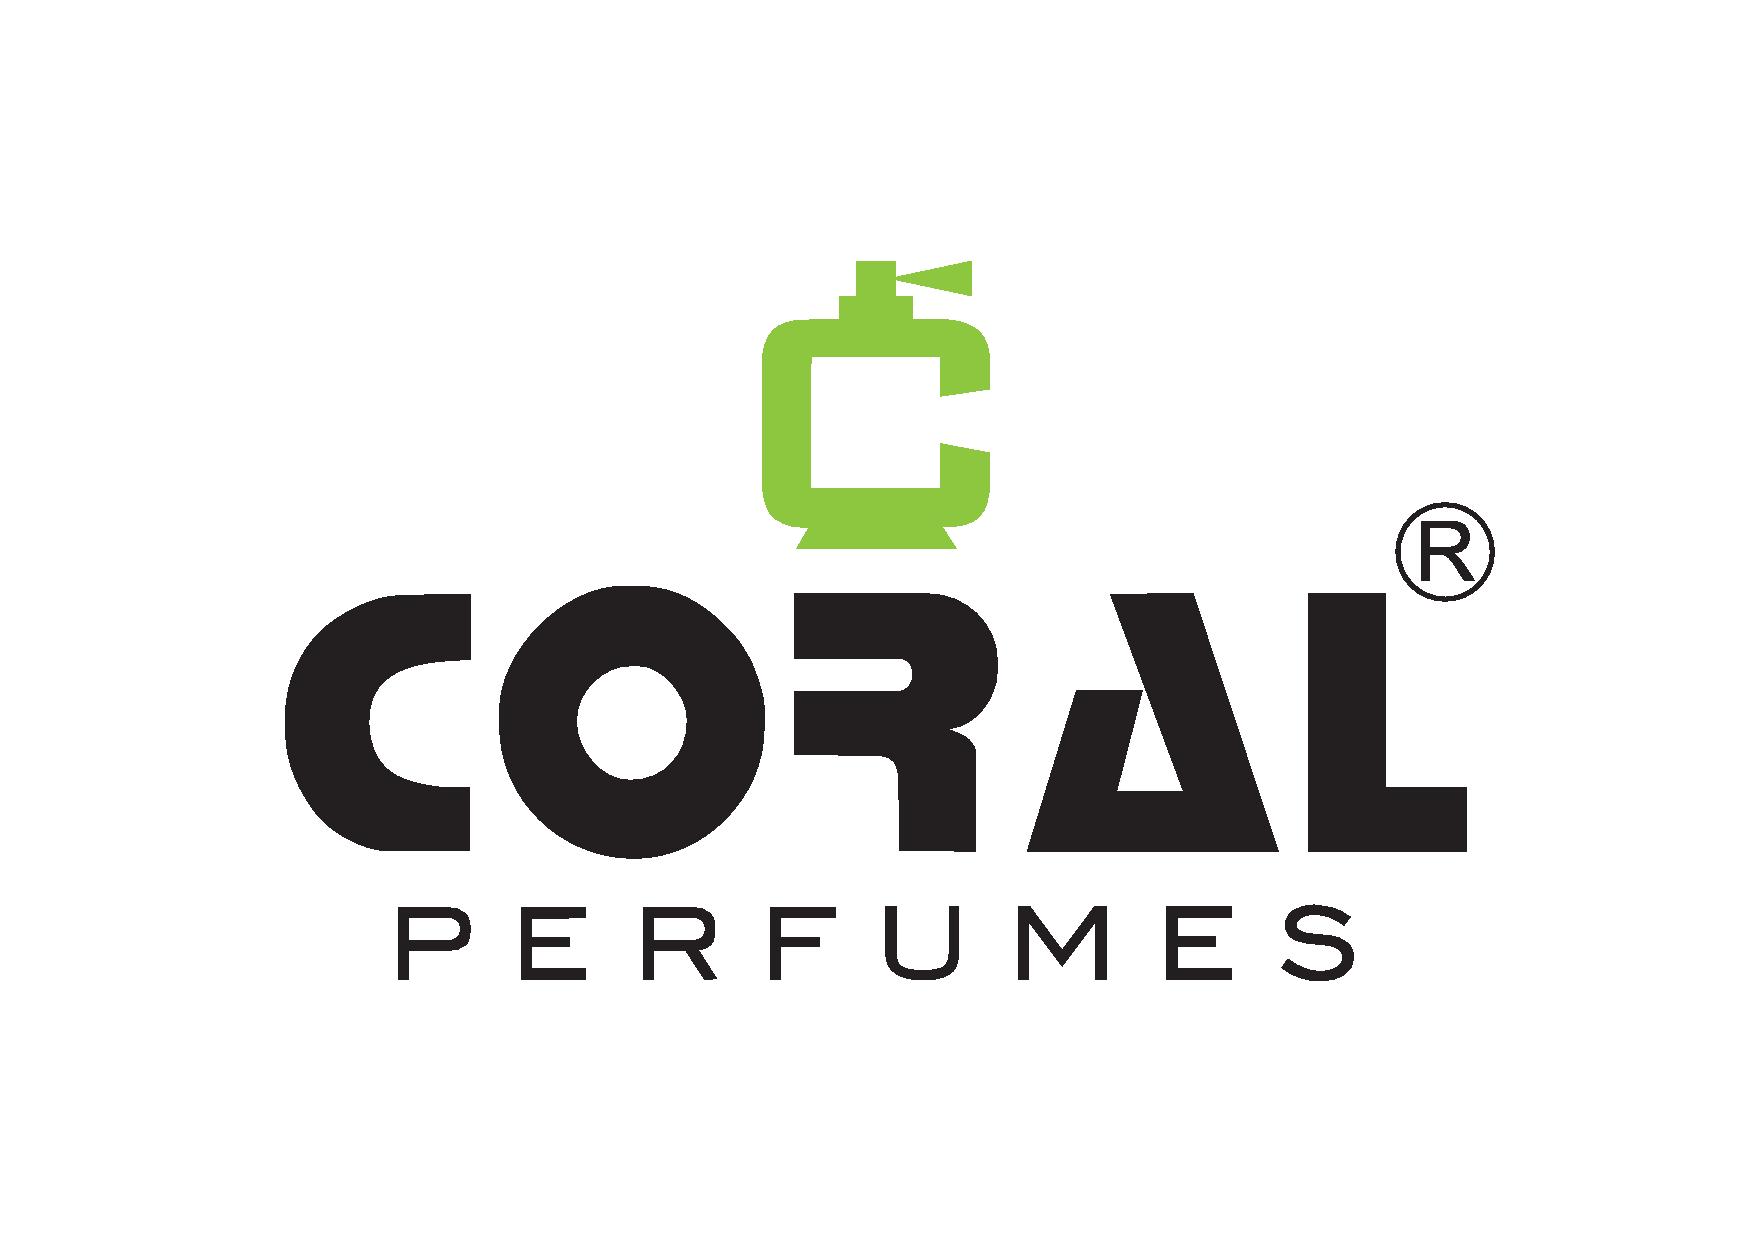 CoralPerfumes